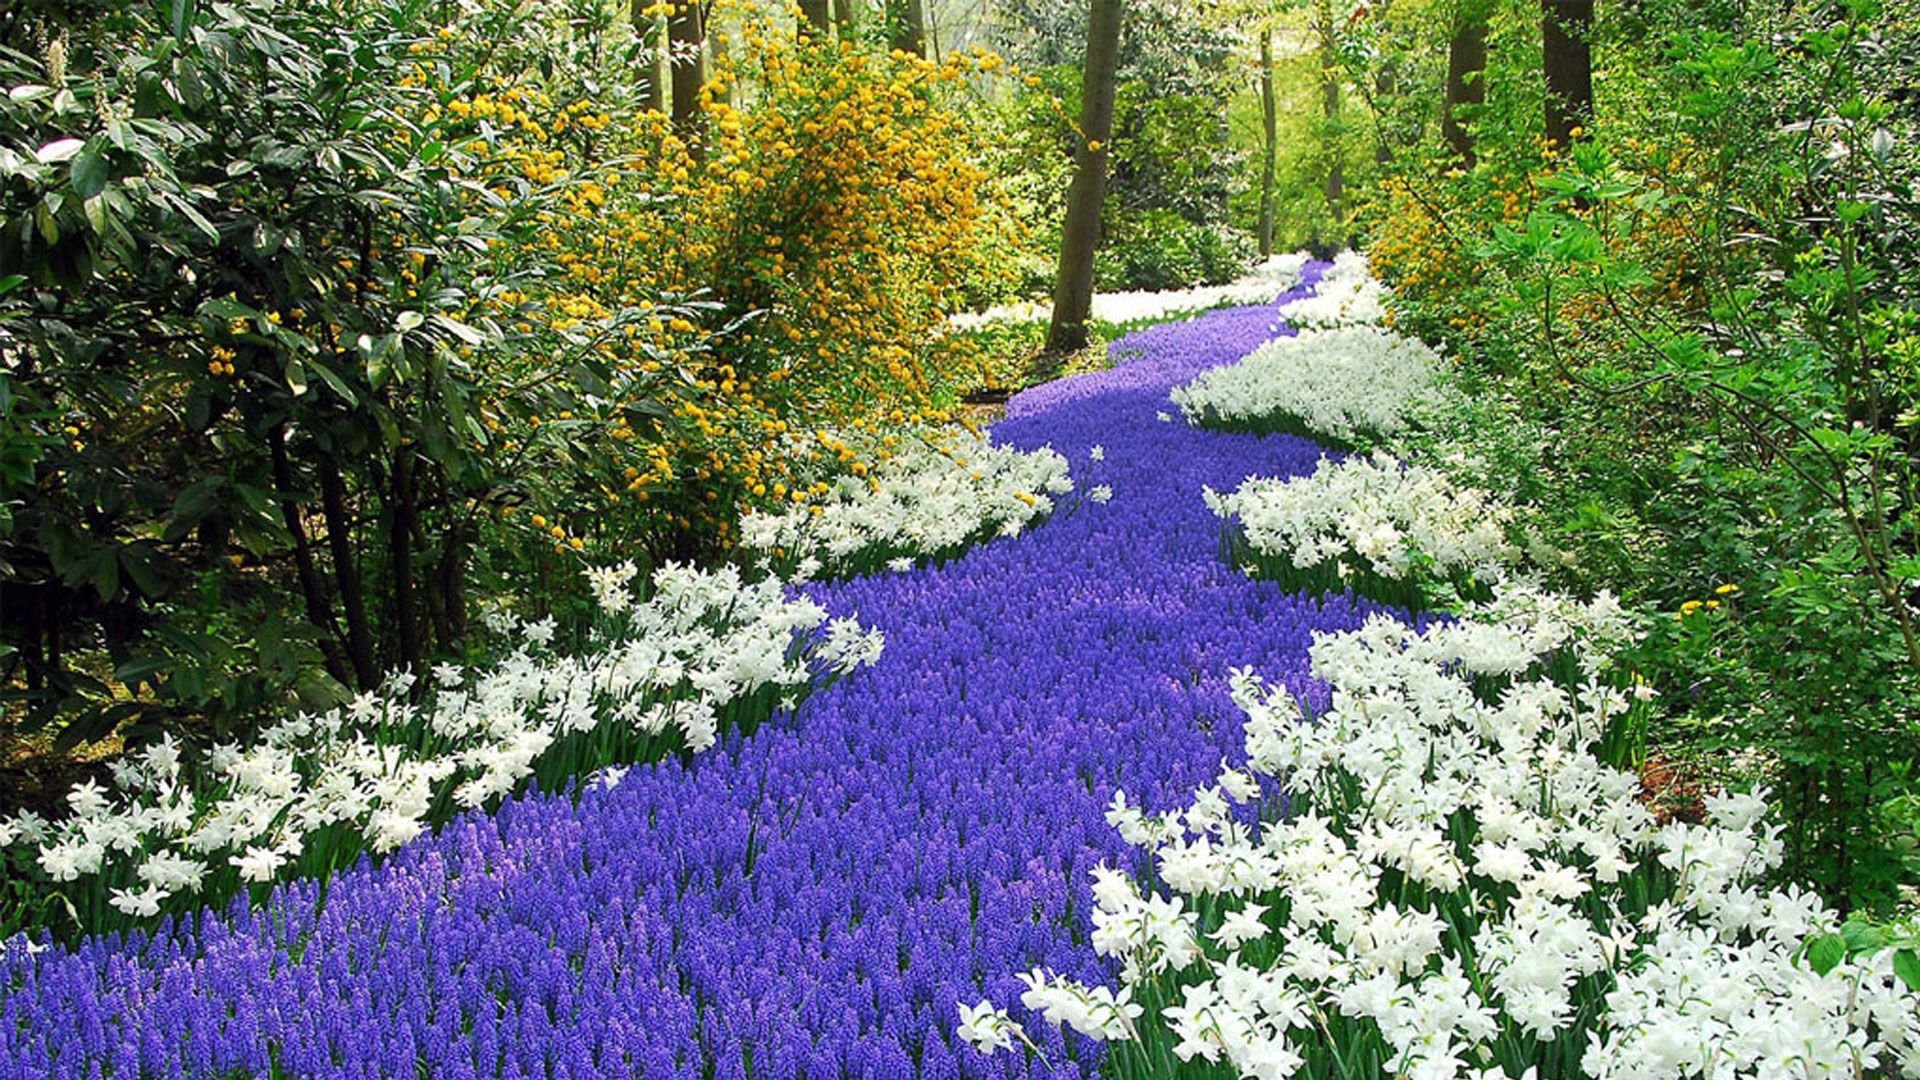 Beautiful Flower Park Ashikaga | HD Wallpapers | Pinterest | Park ...